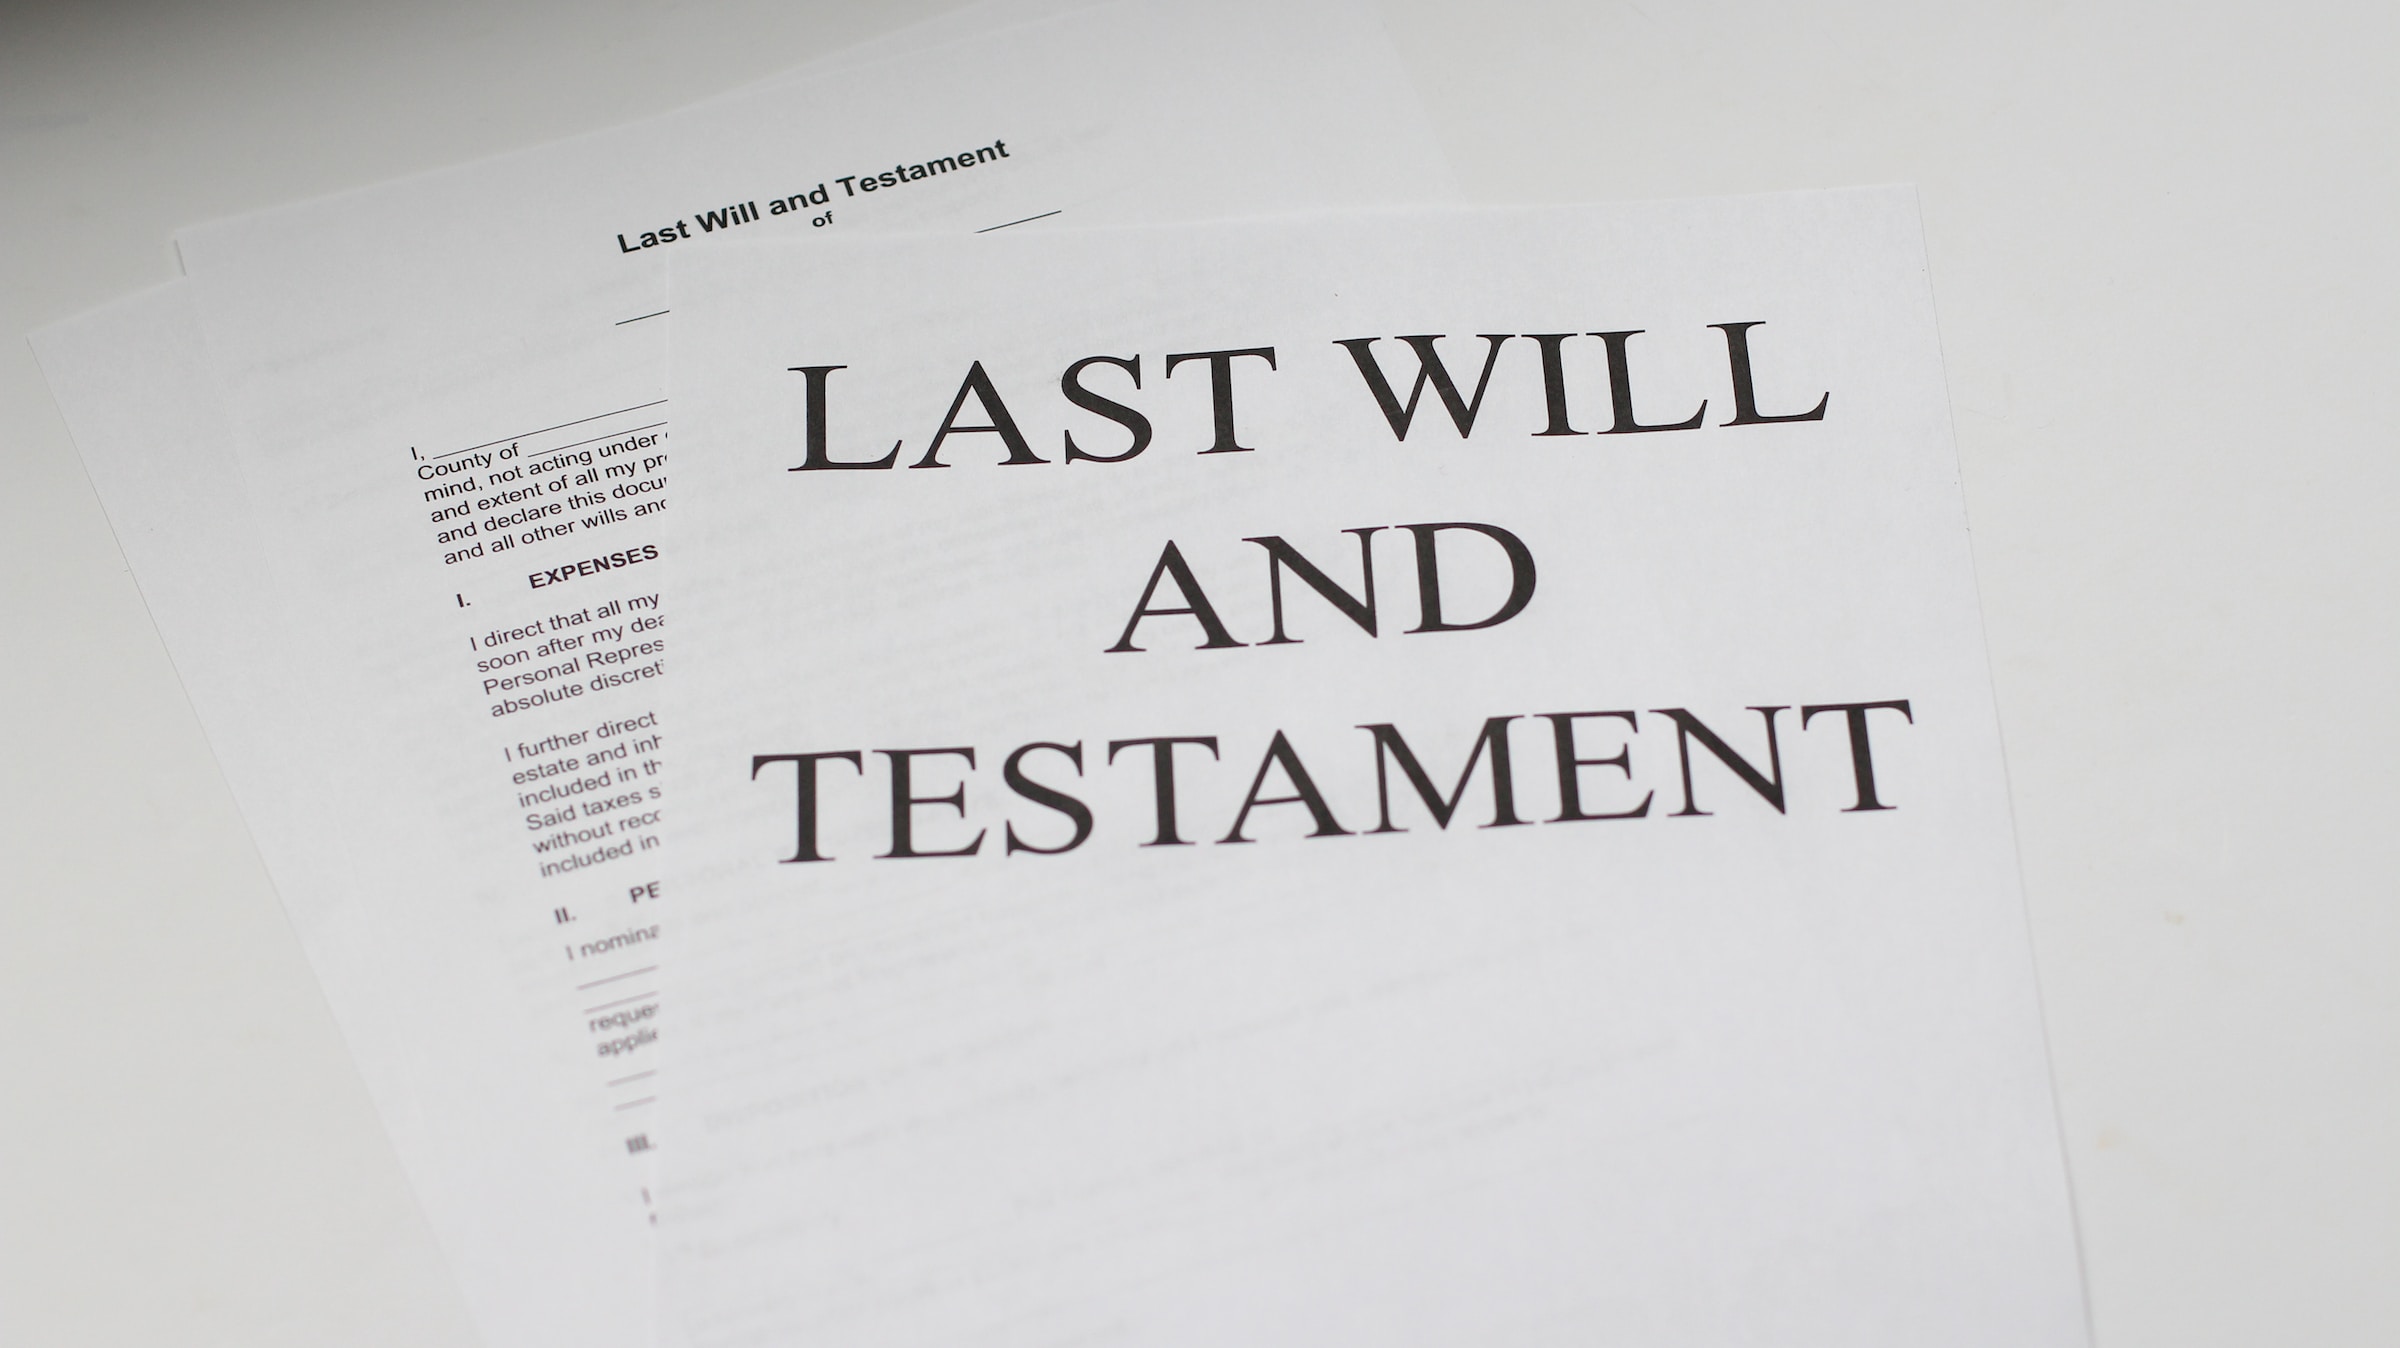 Last will and testament documents | Source: Unsplash